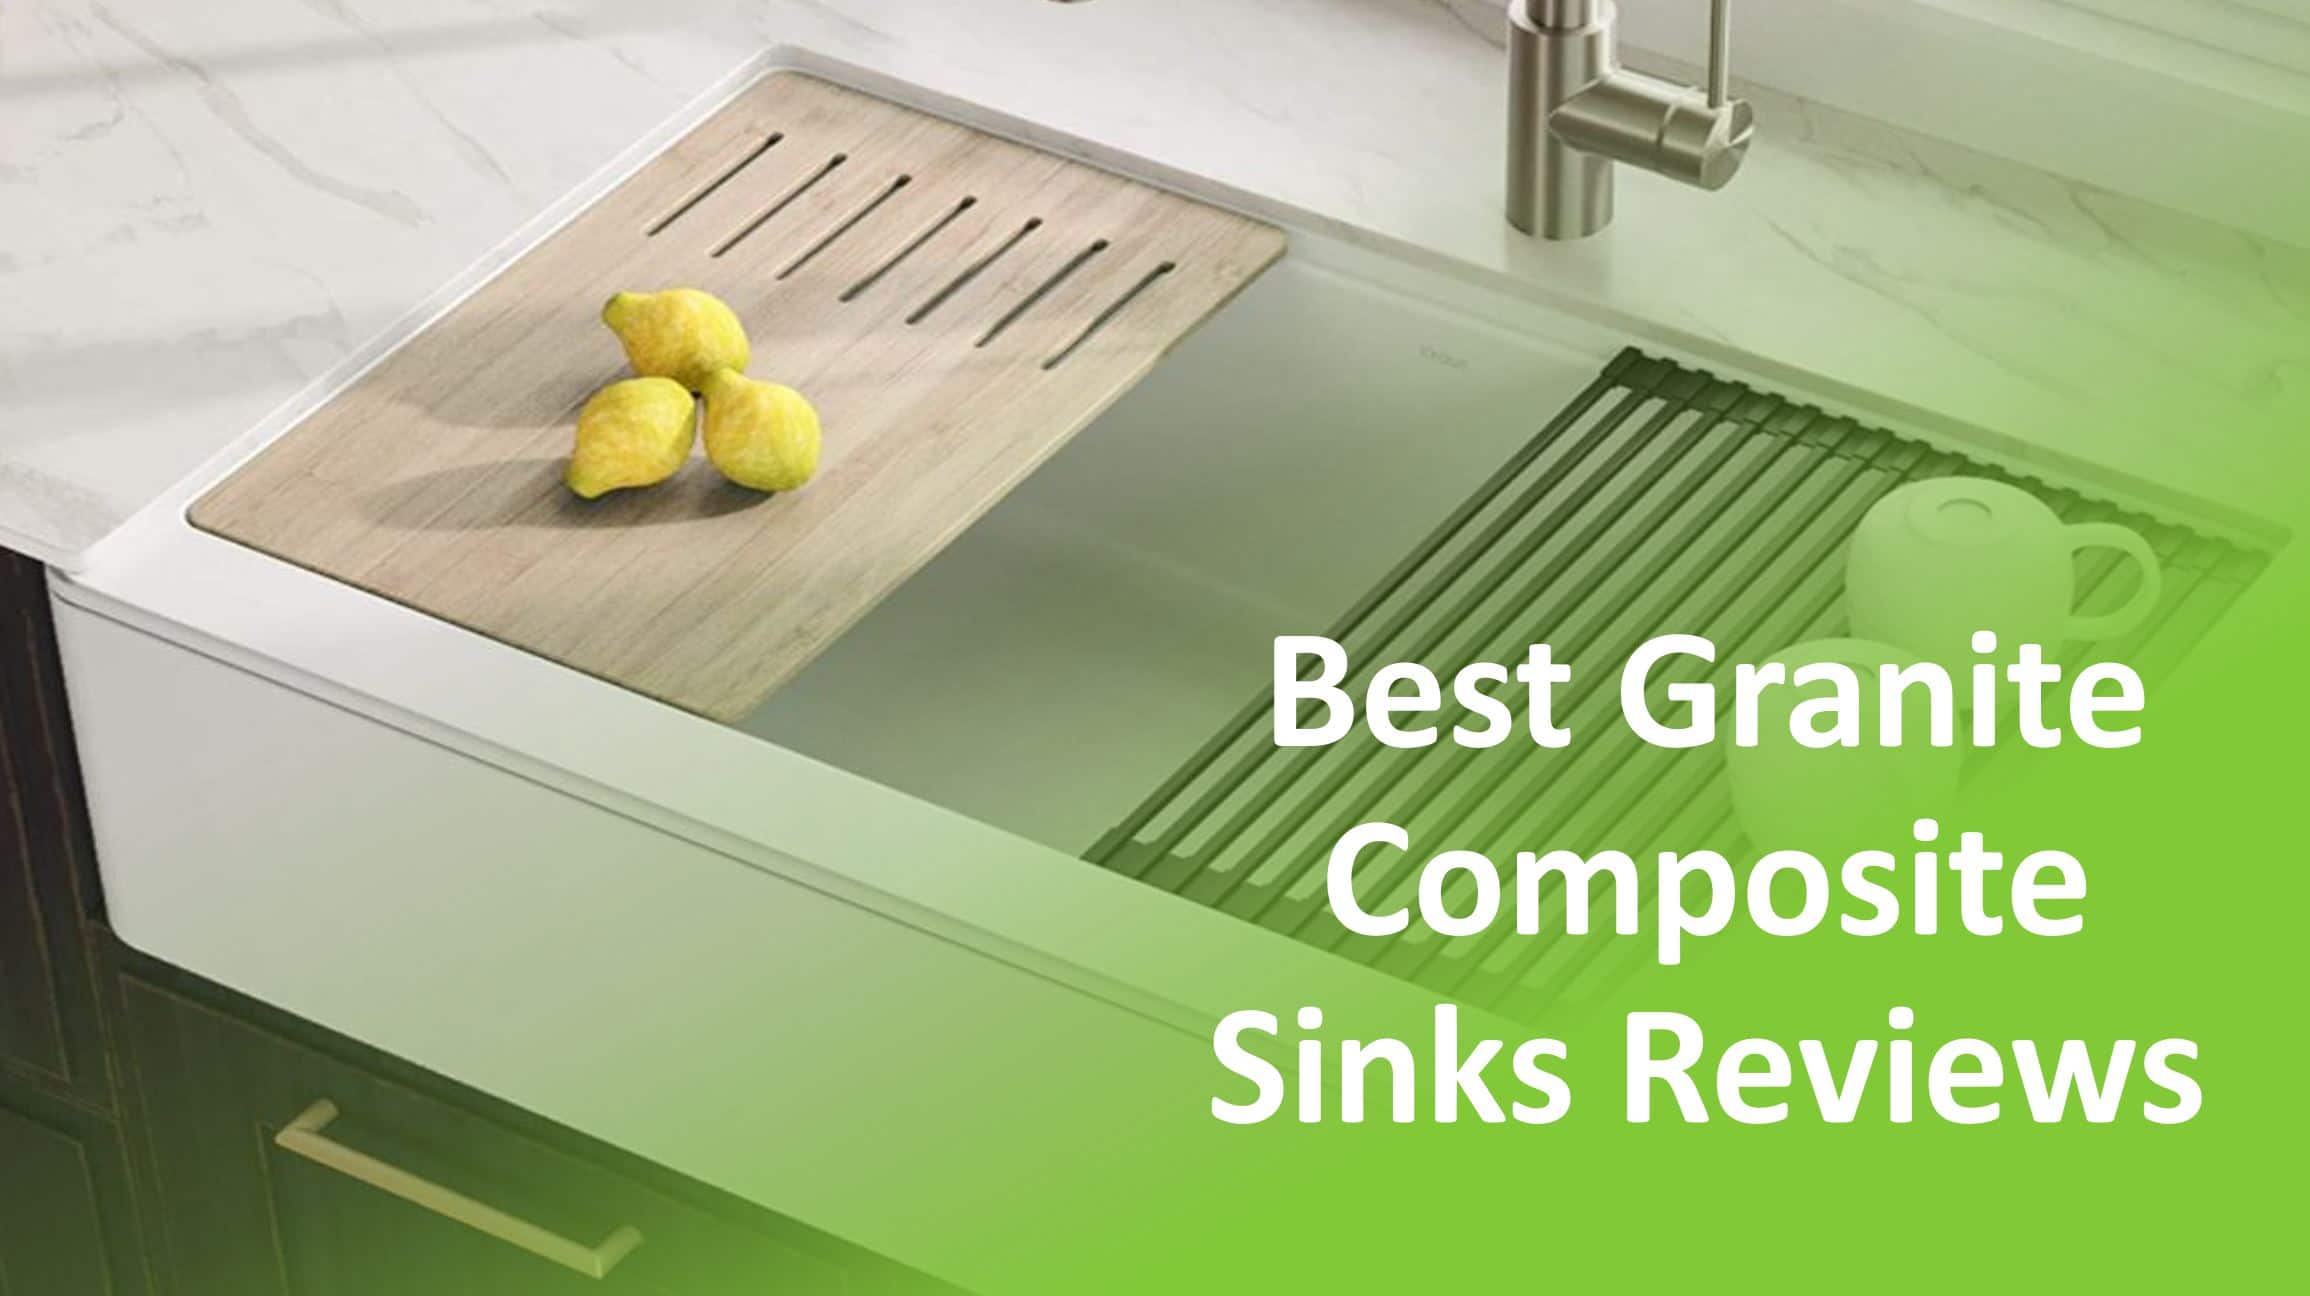 Best Granite Composite Sinks Reviews 